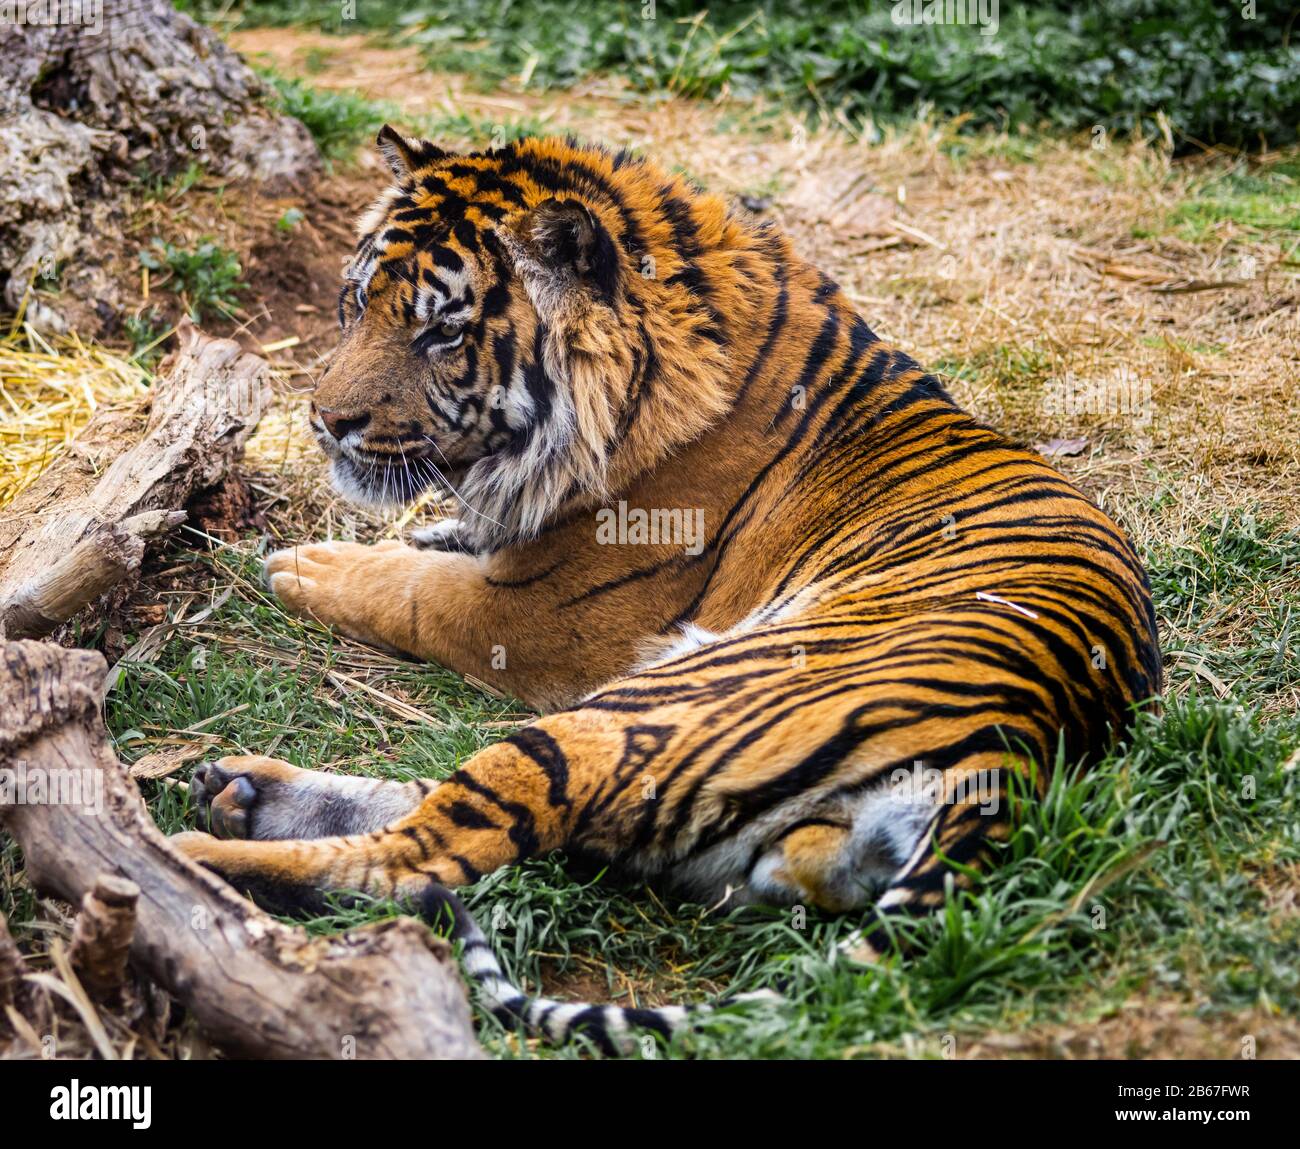 A Sumatran Tiger looking intently at something with orange fur. Stock Photo